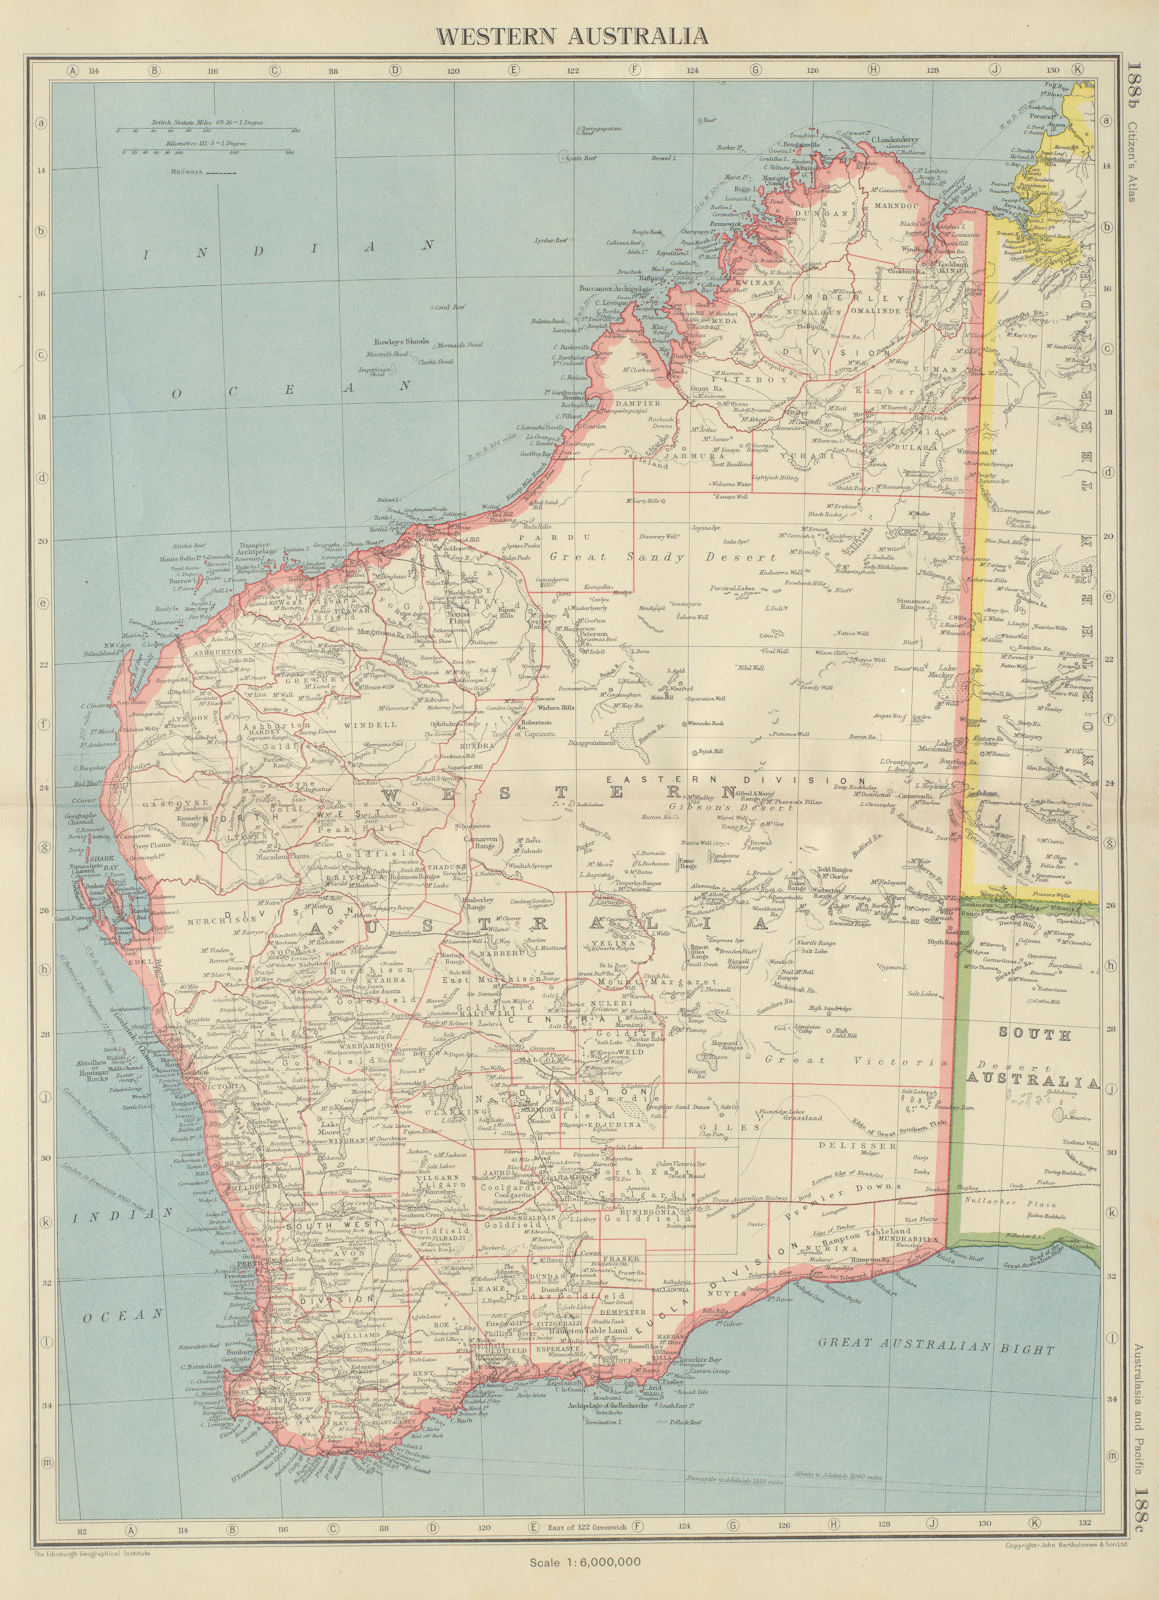 WESTERN AUSTRALIA. showing land districts & goldfields. BARTHOLOMEW 1947 map